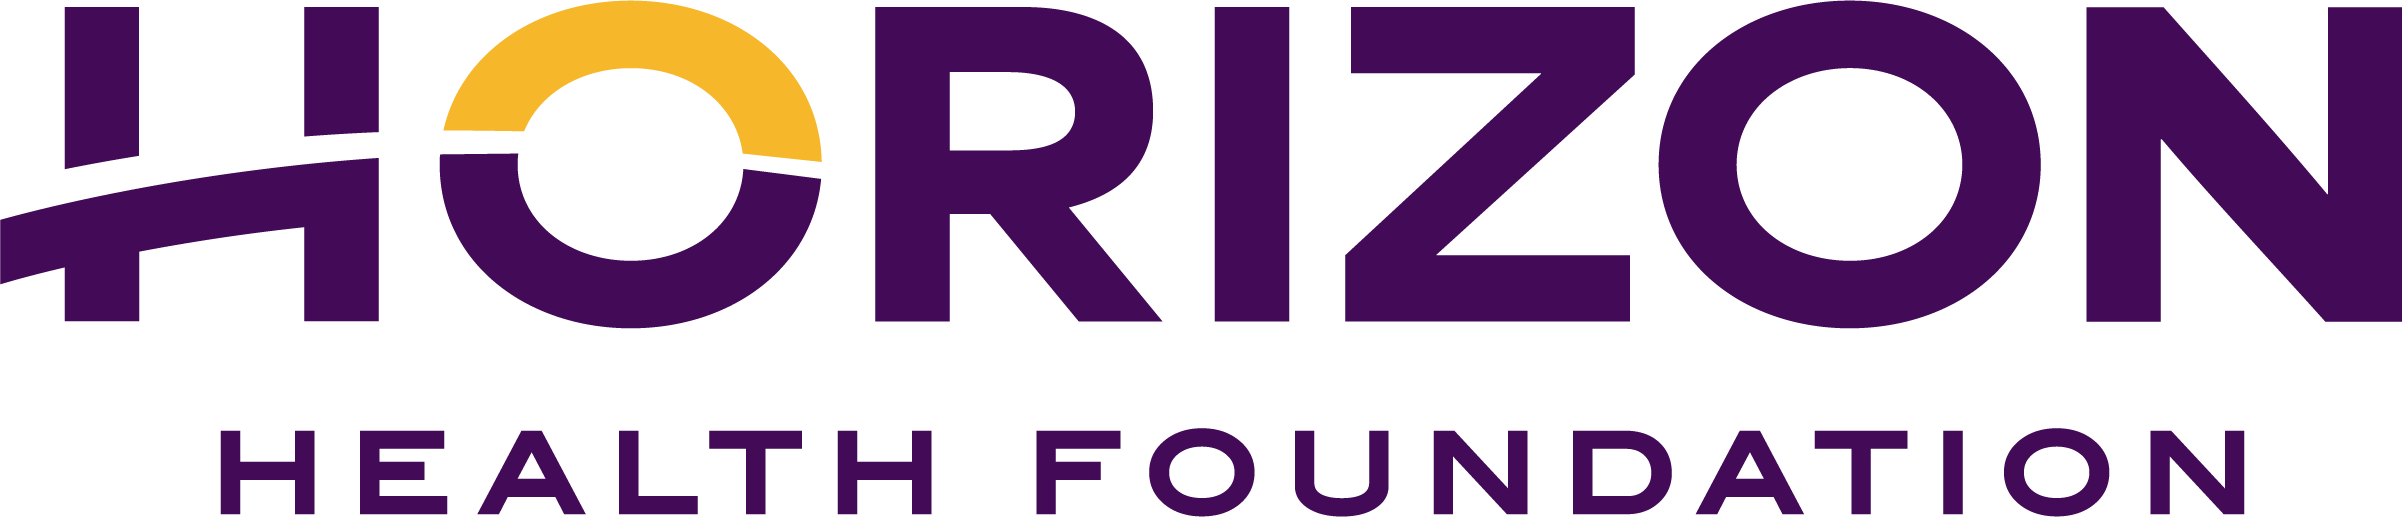 Horizon Health Foundation Homepage